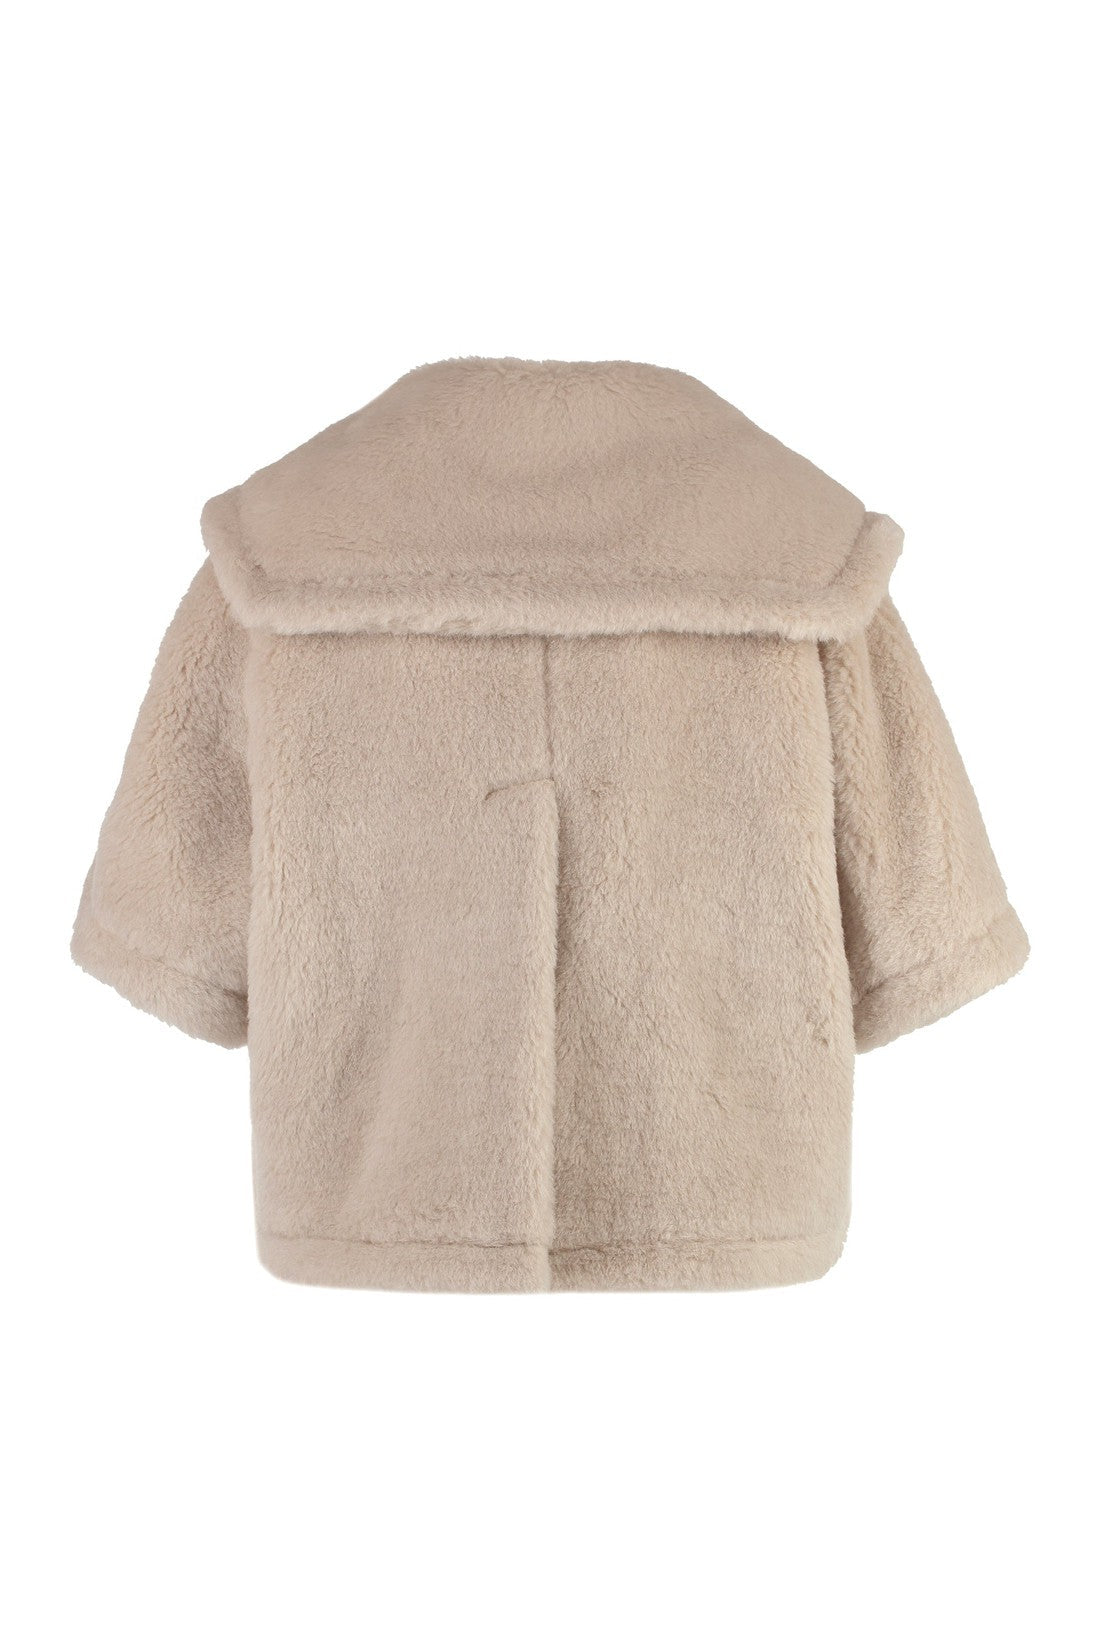 Max Mara-OUTLET-SALE-Cambusa wool blend cape coat-ARCHIVIST